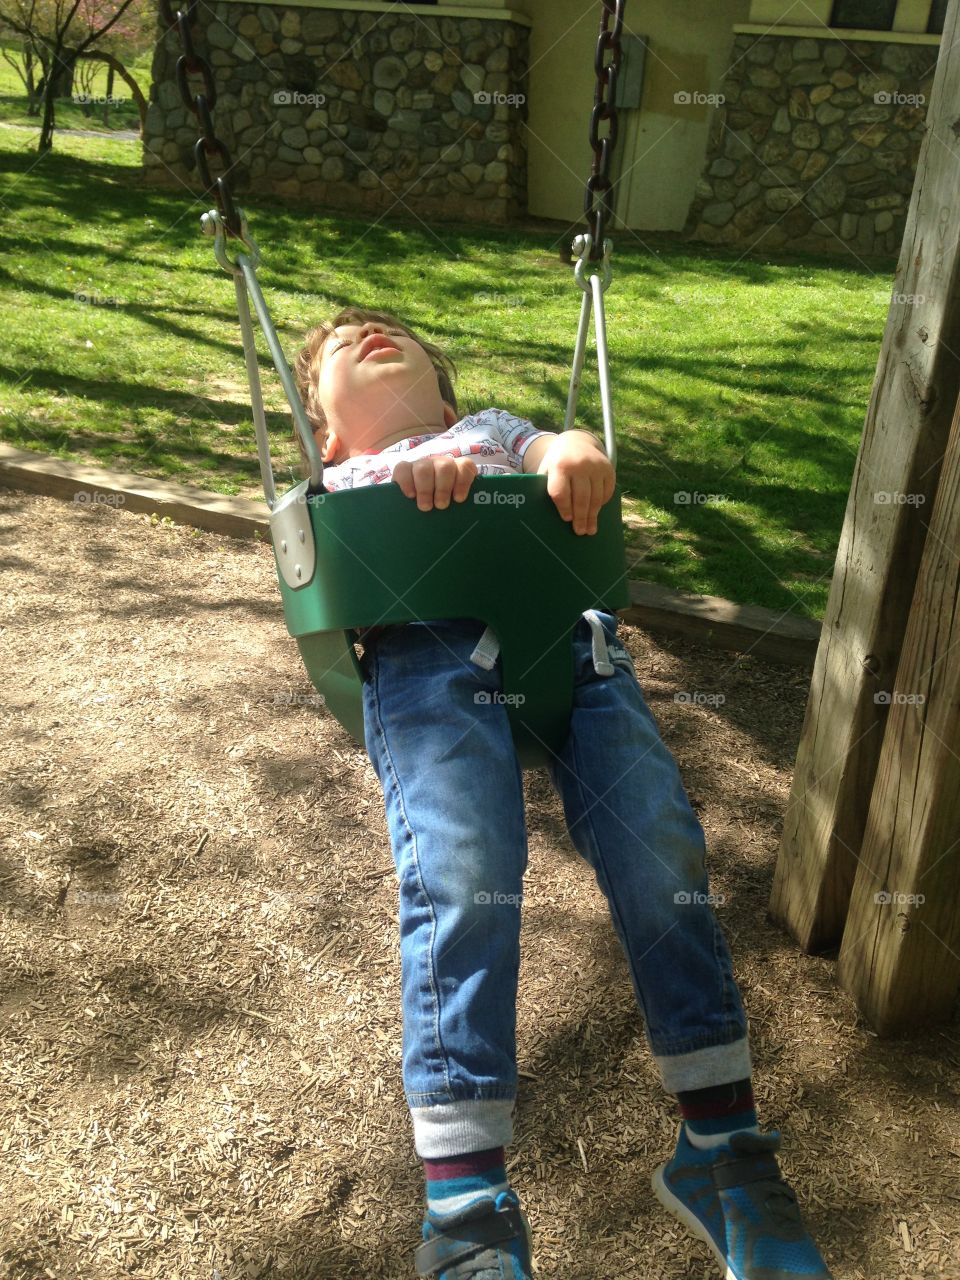 Asleep on the swings!